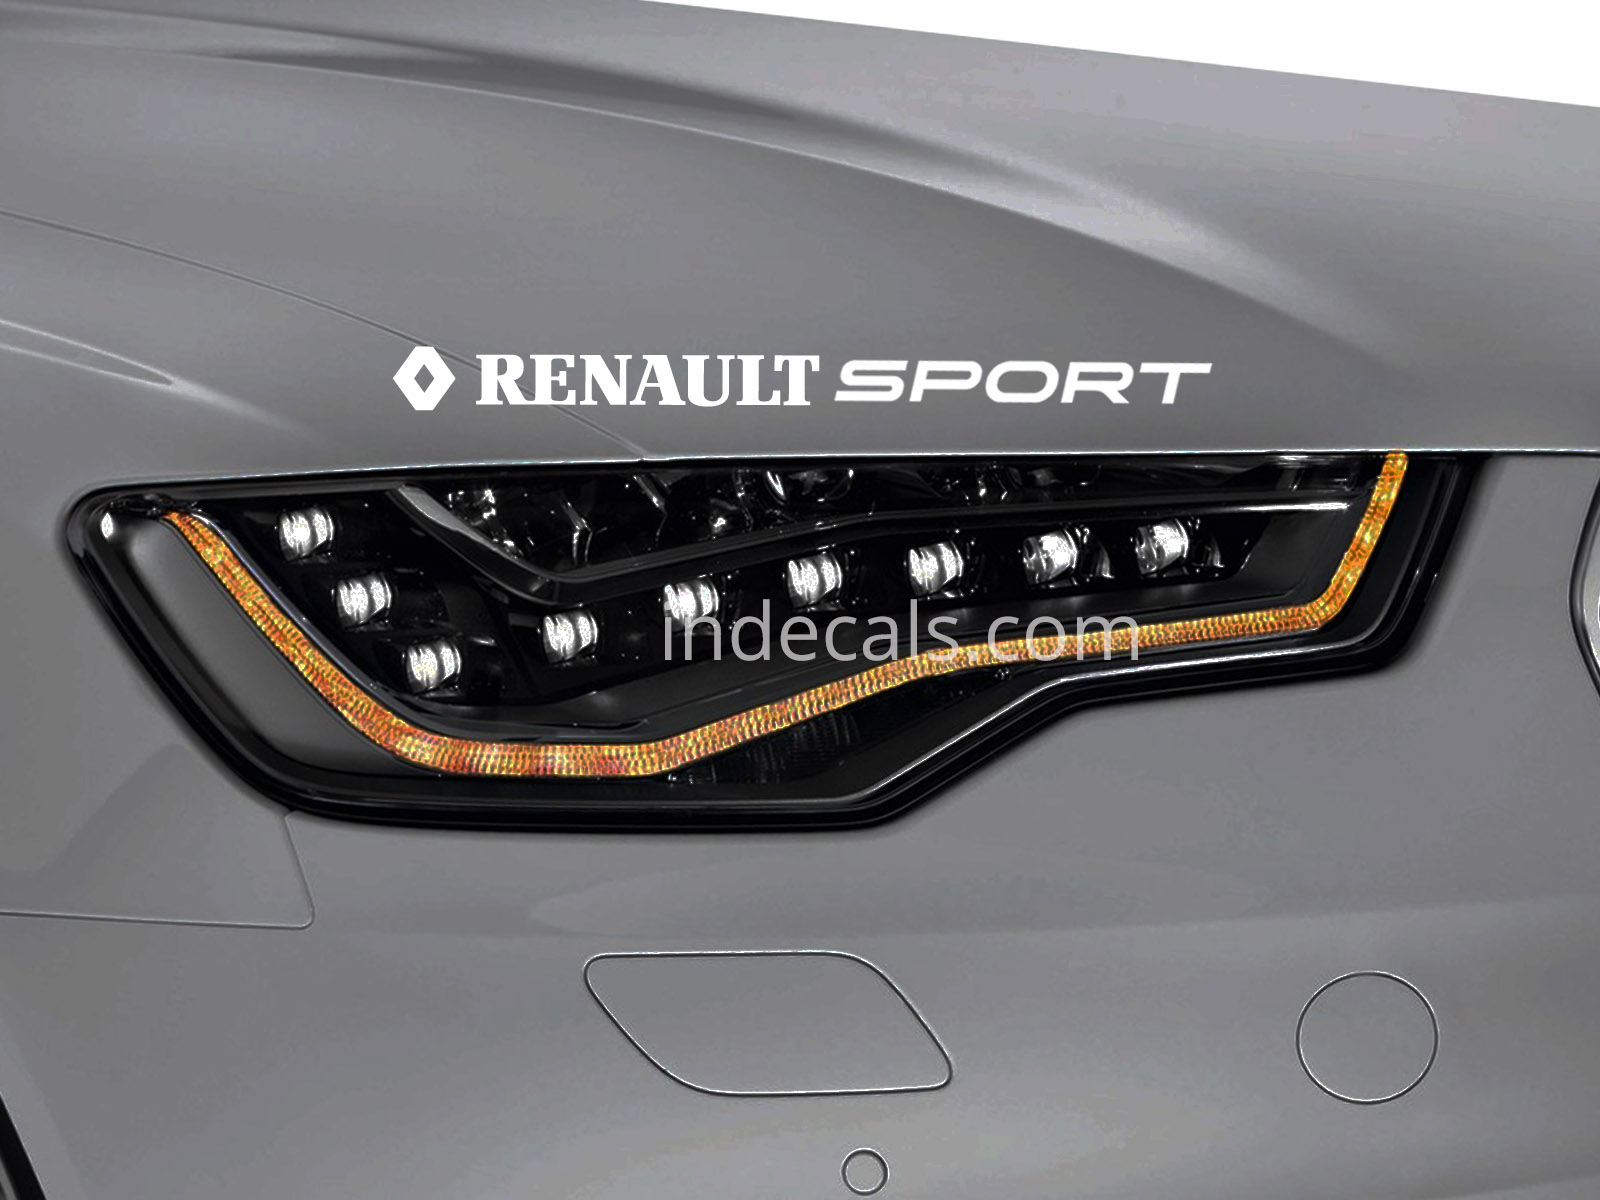 1 x Renault Sport Sticker for Eyebrow - White